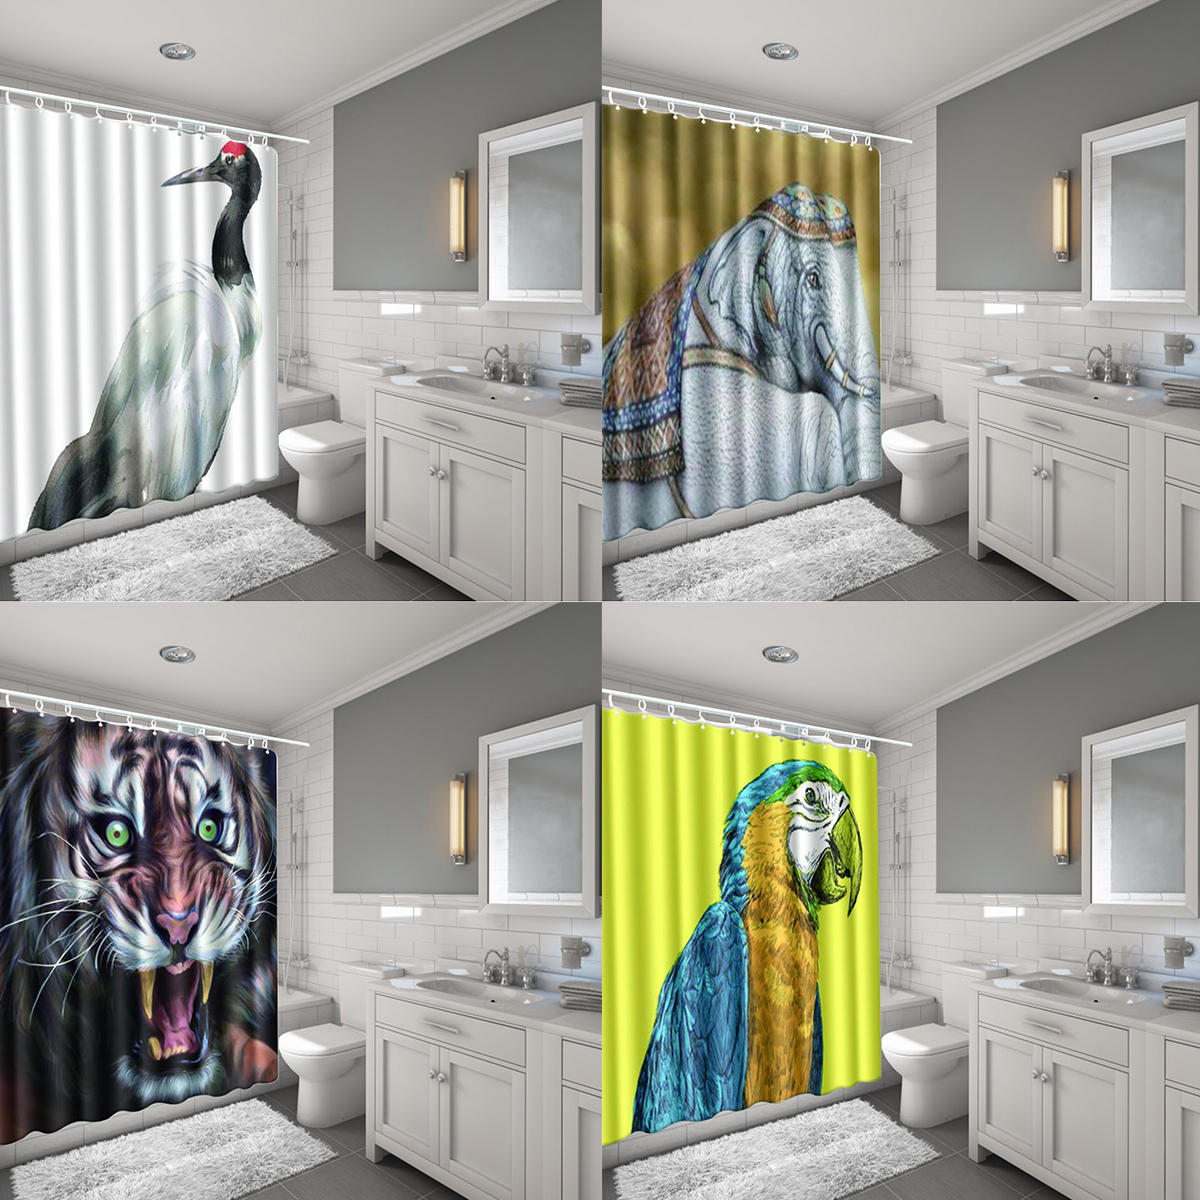 Waterproof Fabric Scenery Bathroom Shower Curtain Panel Sheer and Bath Mat Toilet Cover Bath Rugs